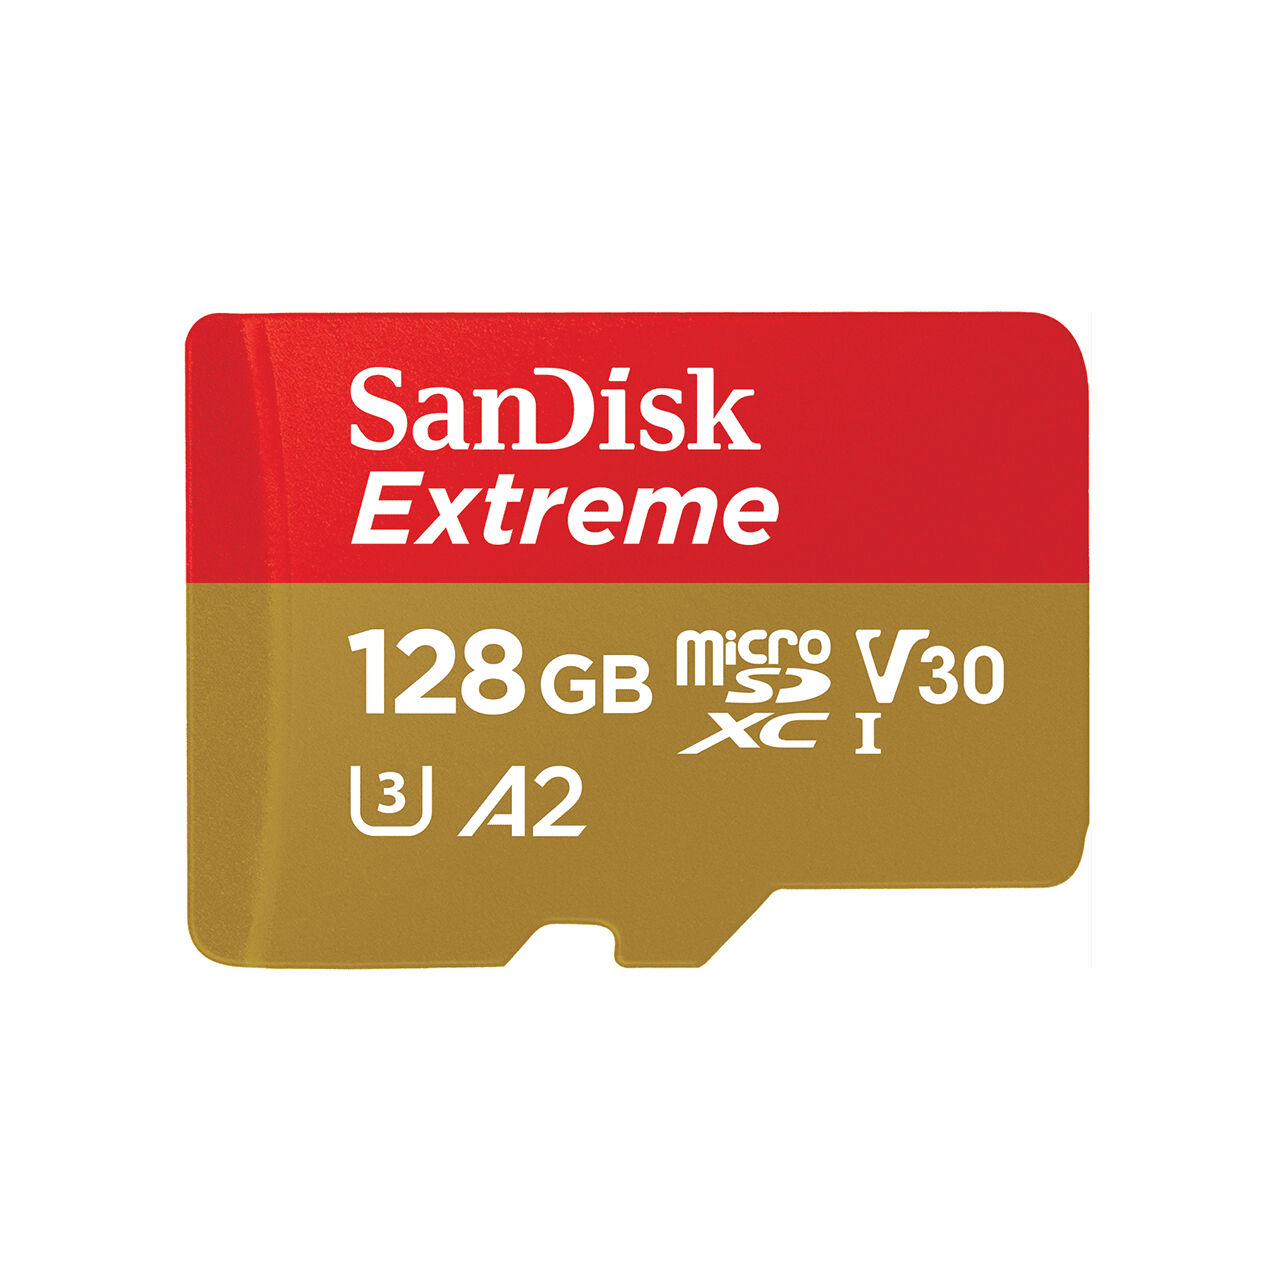 SanDisk Extreme 128GB (SDSQXA1-128G-GN6GN)